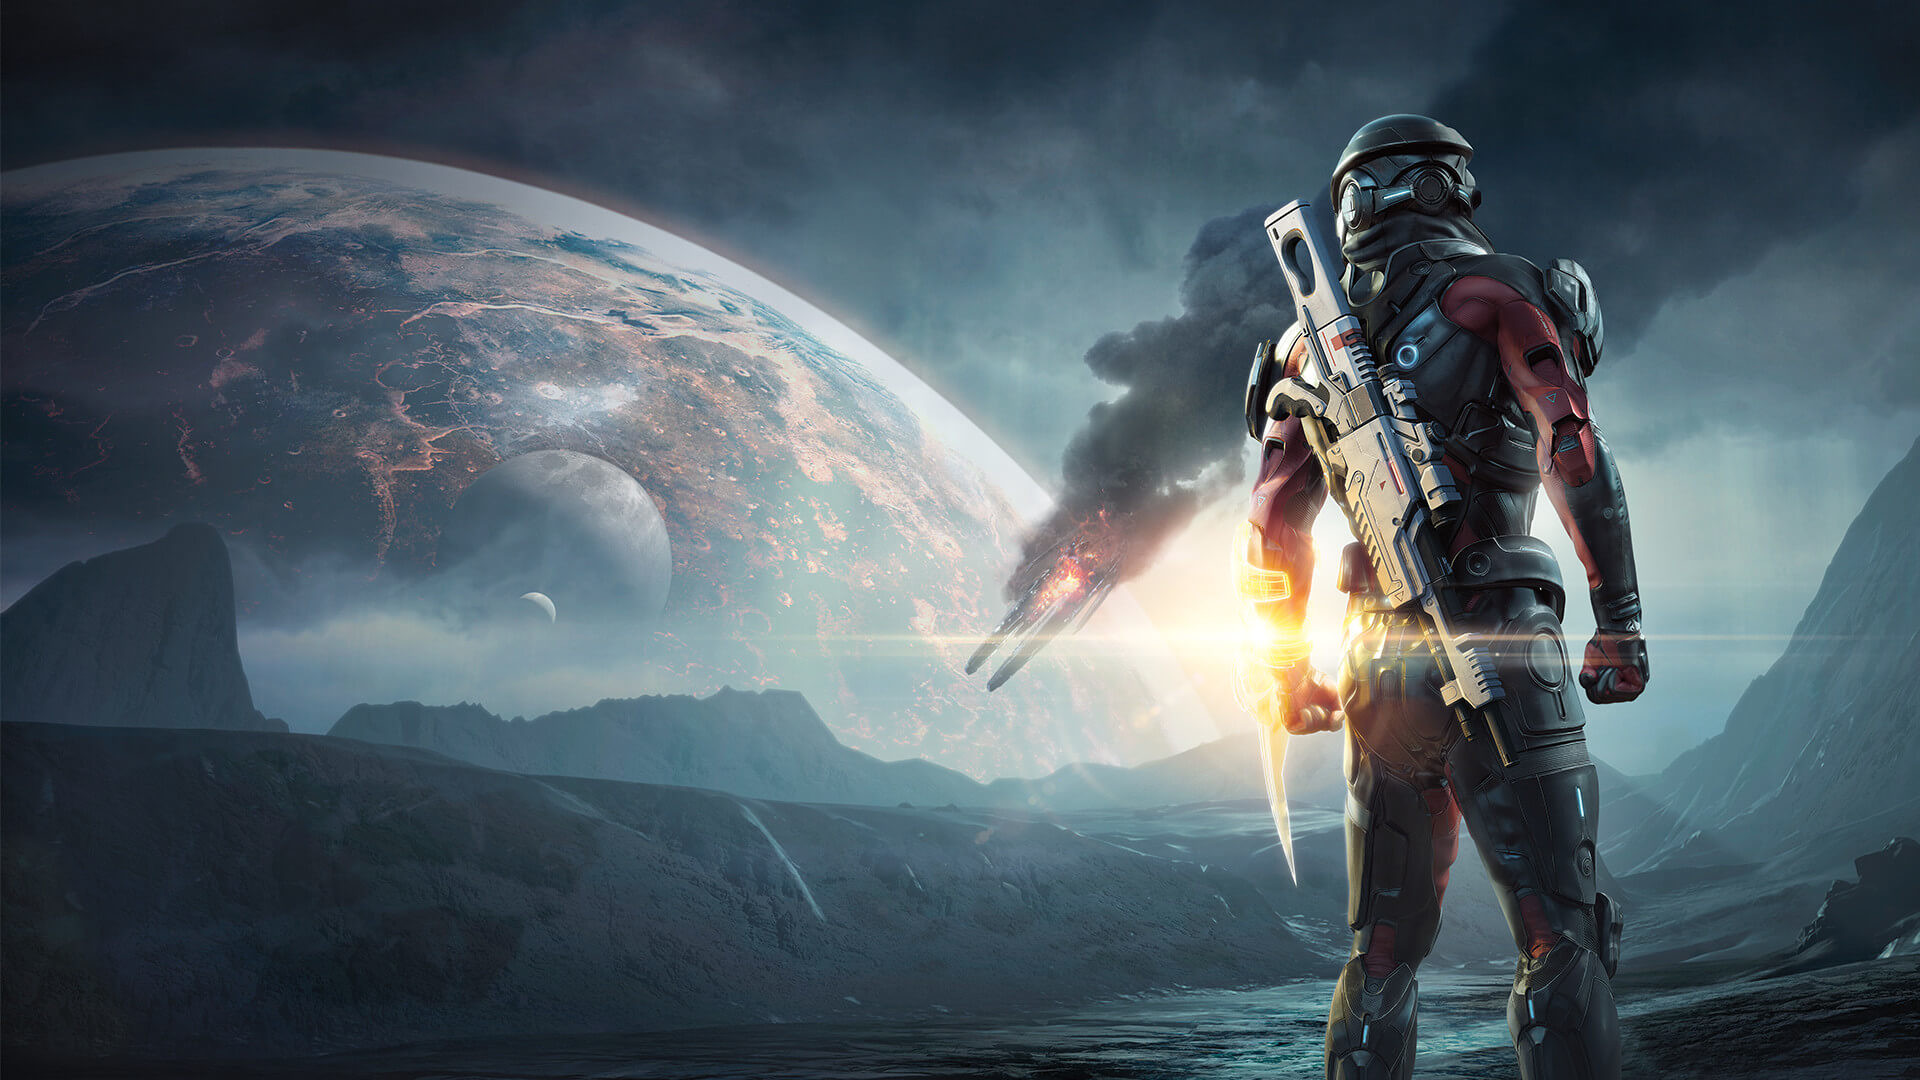 1920x1080 Mass Effect Andromeda – Entwickler Ã¤uÃert sich Ã¼ber fehlende DiversitÃ¤t